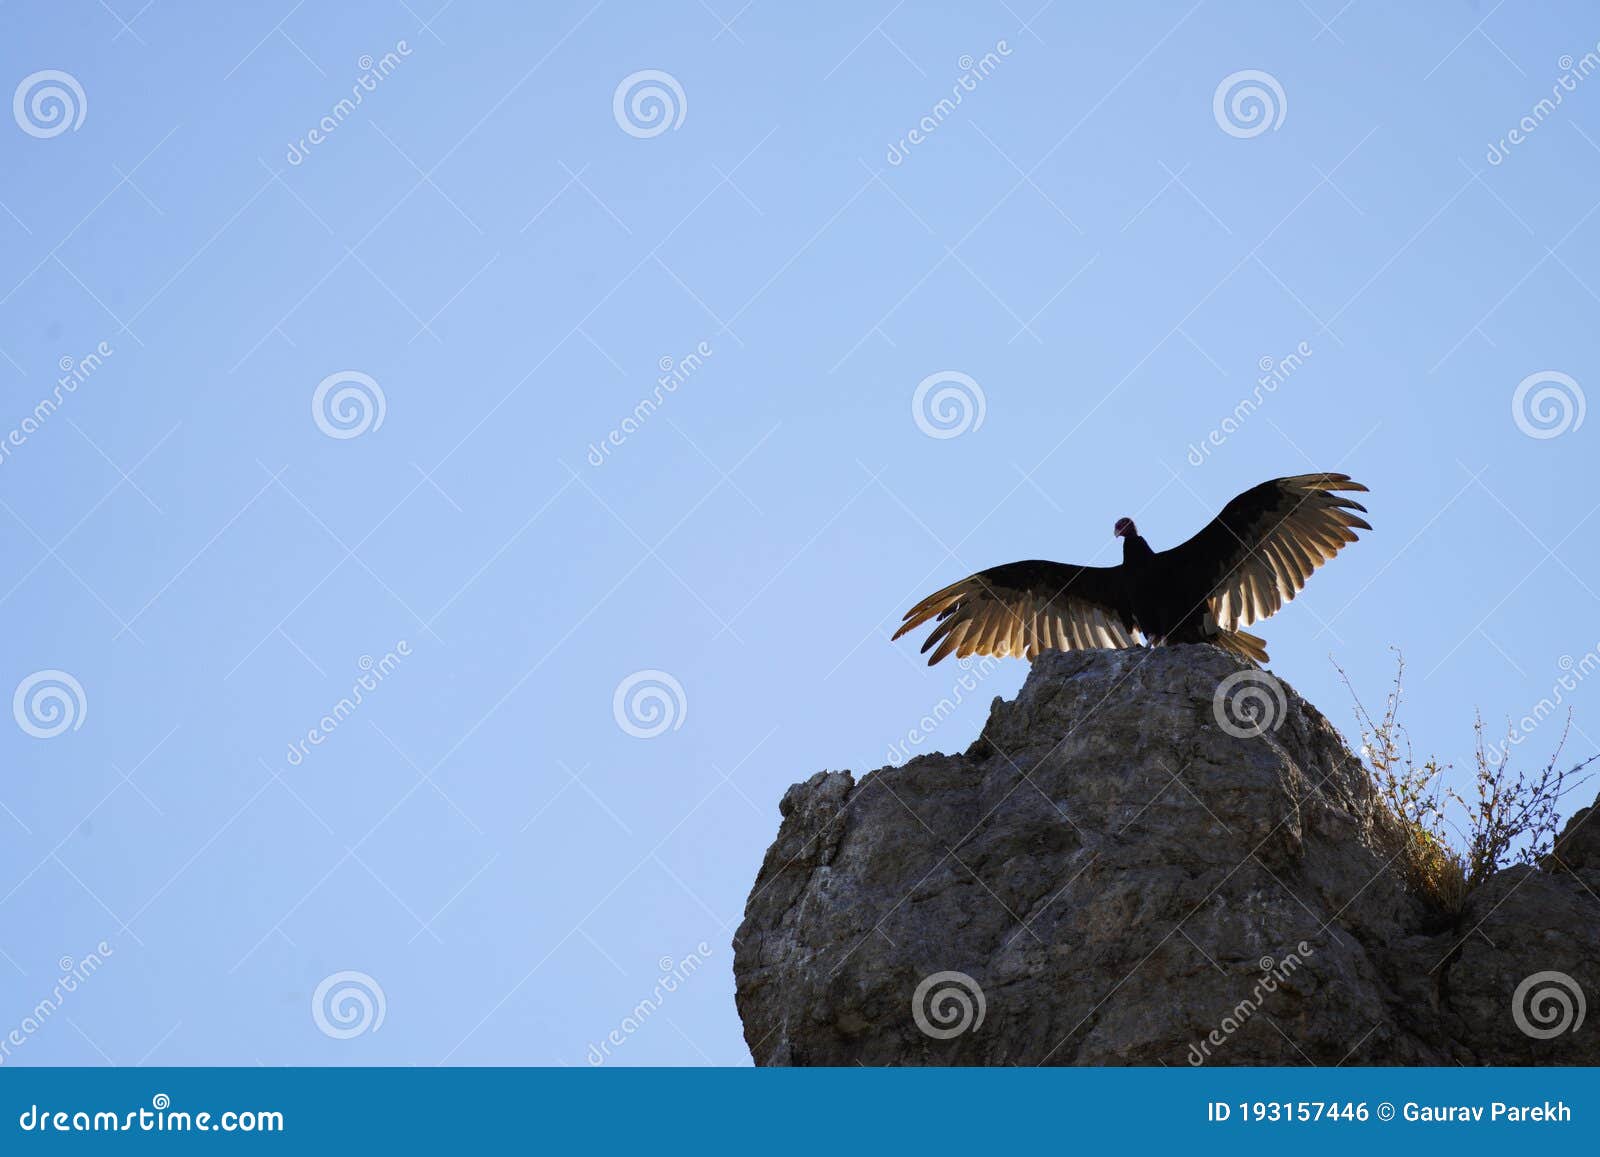 Turkey Buzzard with Wings Spread Stock Photo - Image of animals, lofty ...